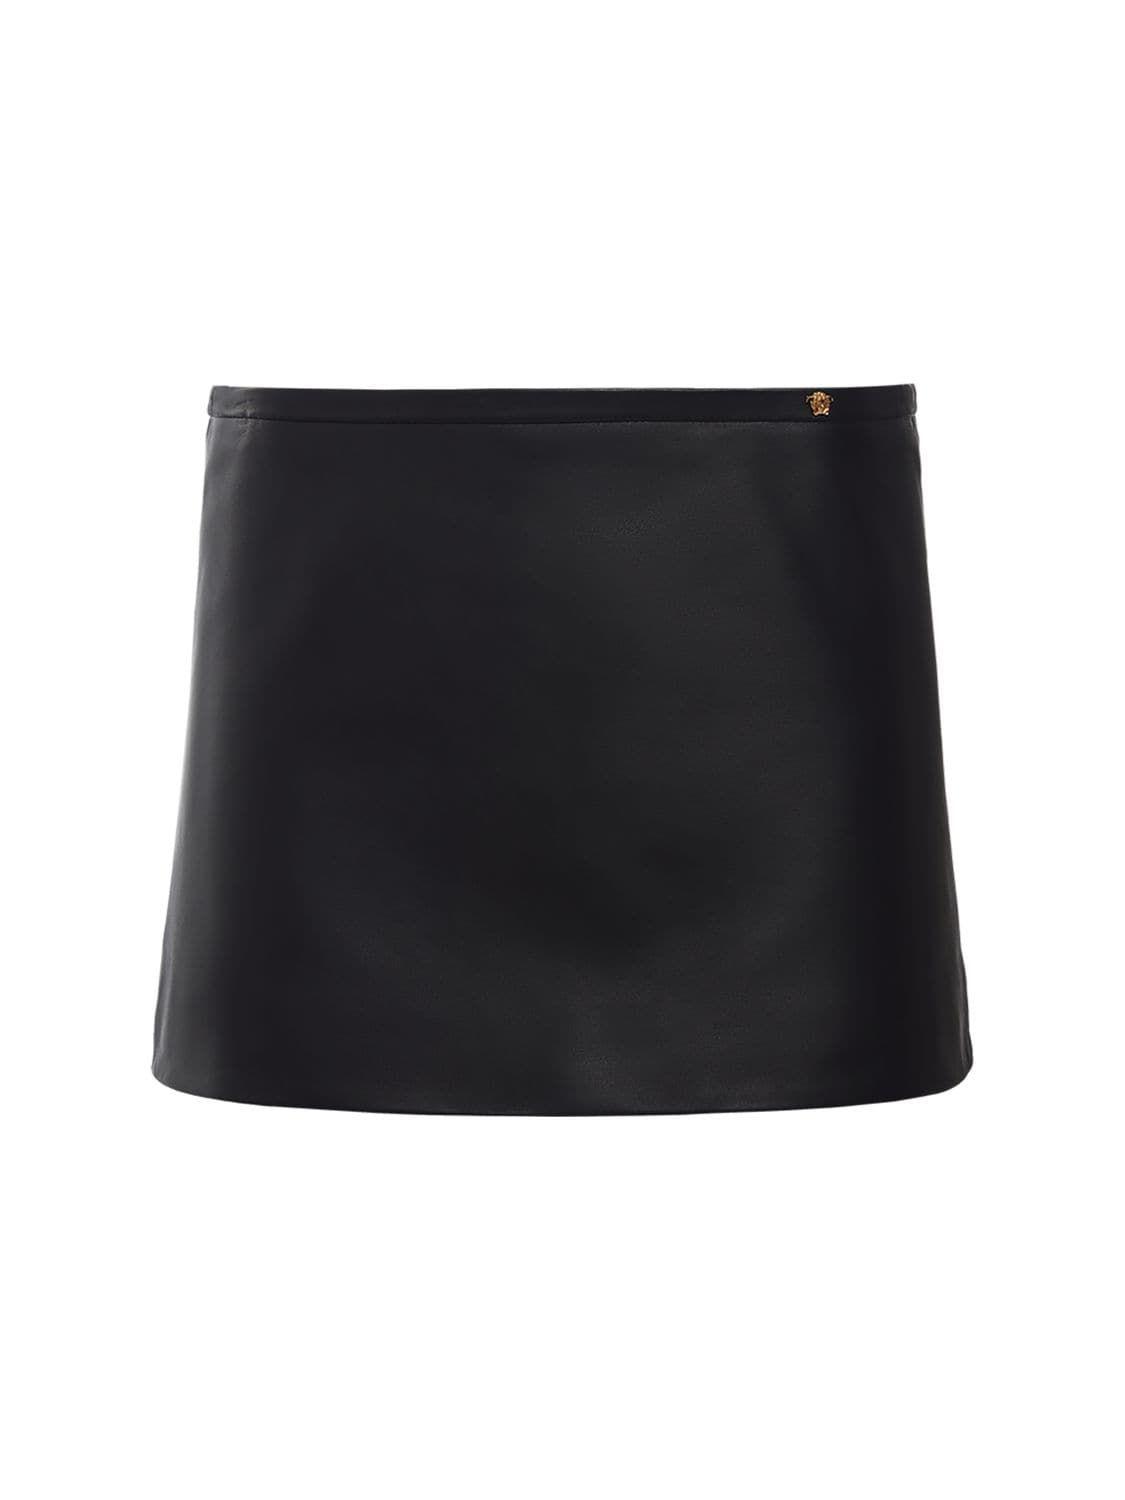 Versace Leather Mini Skirt in Black | Lyst